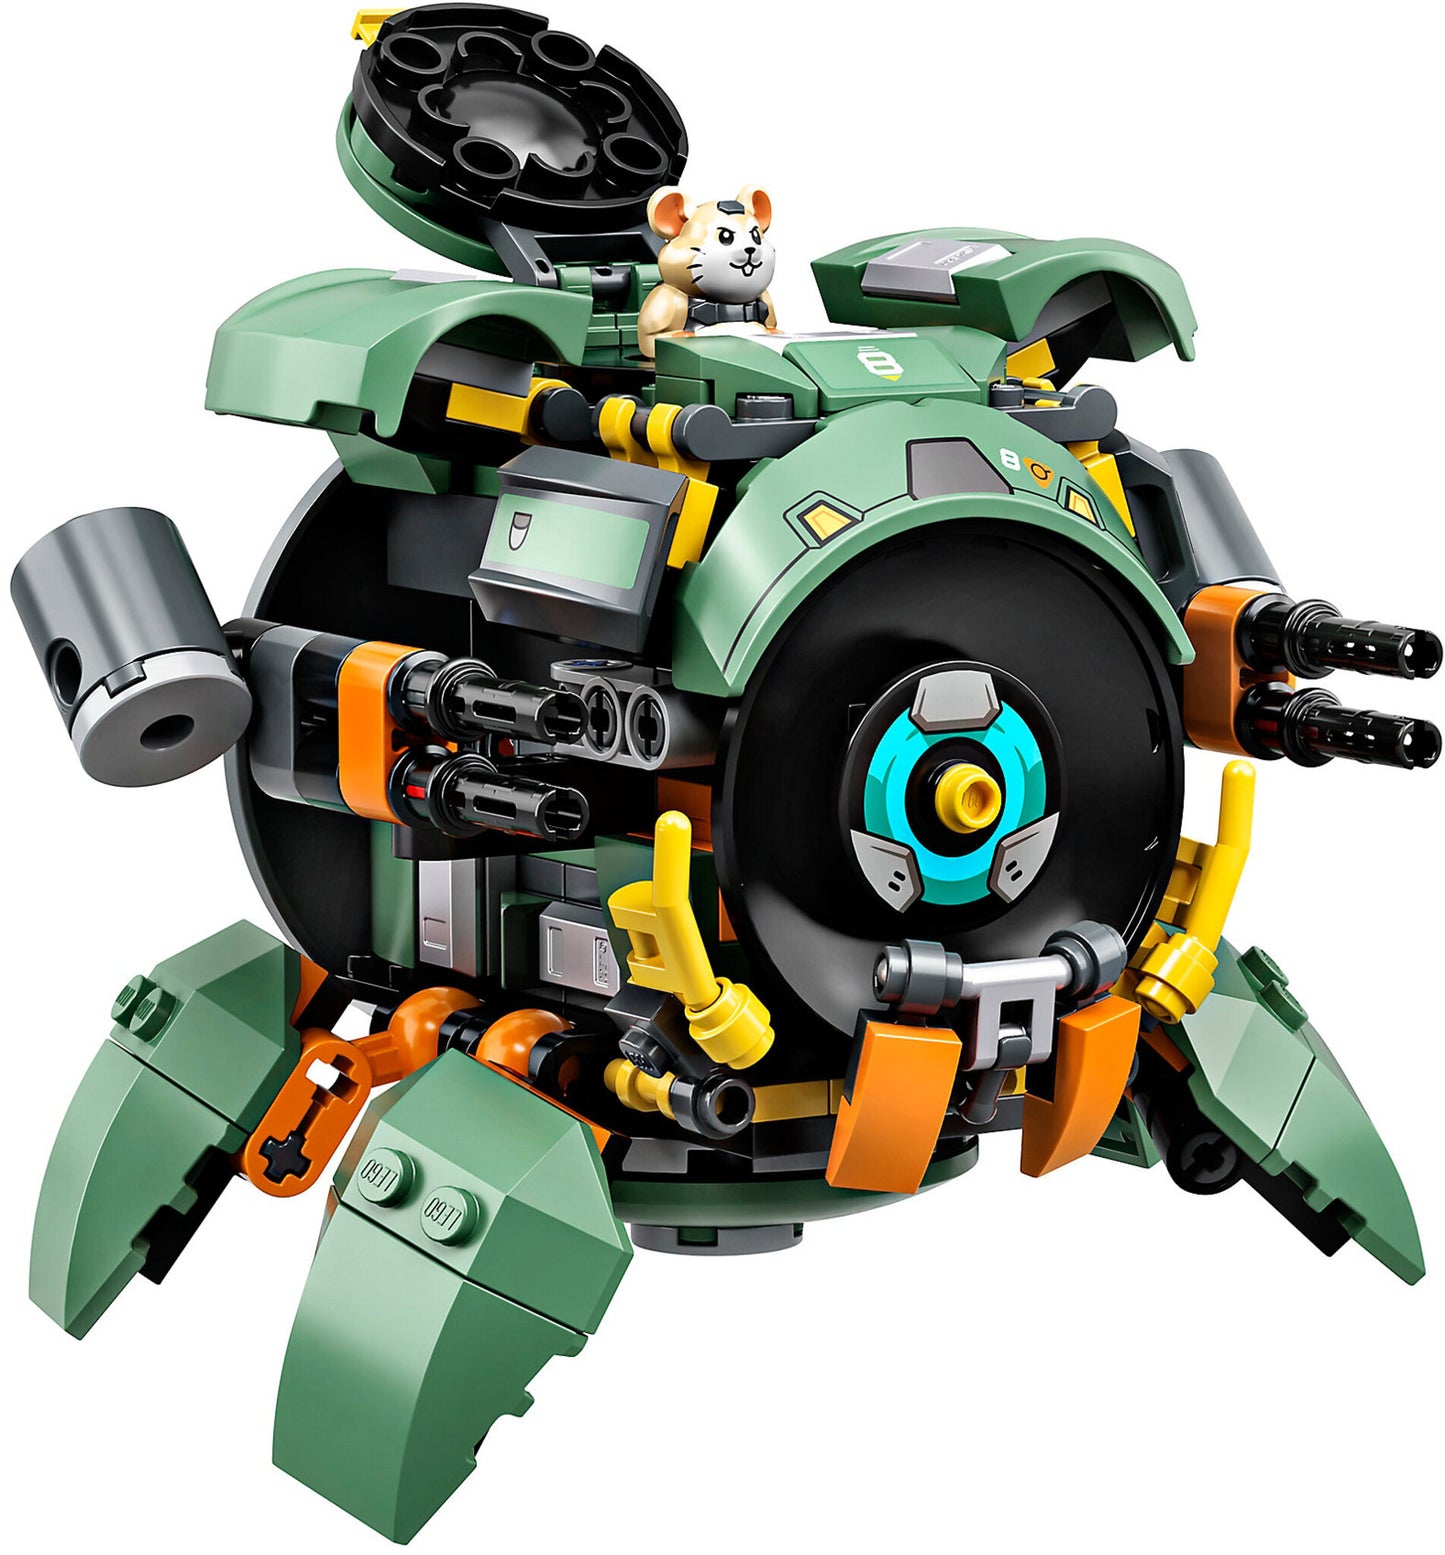 75976 LEGO Overwatch - Wrecking Ball